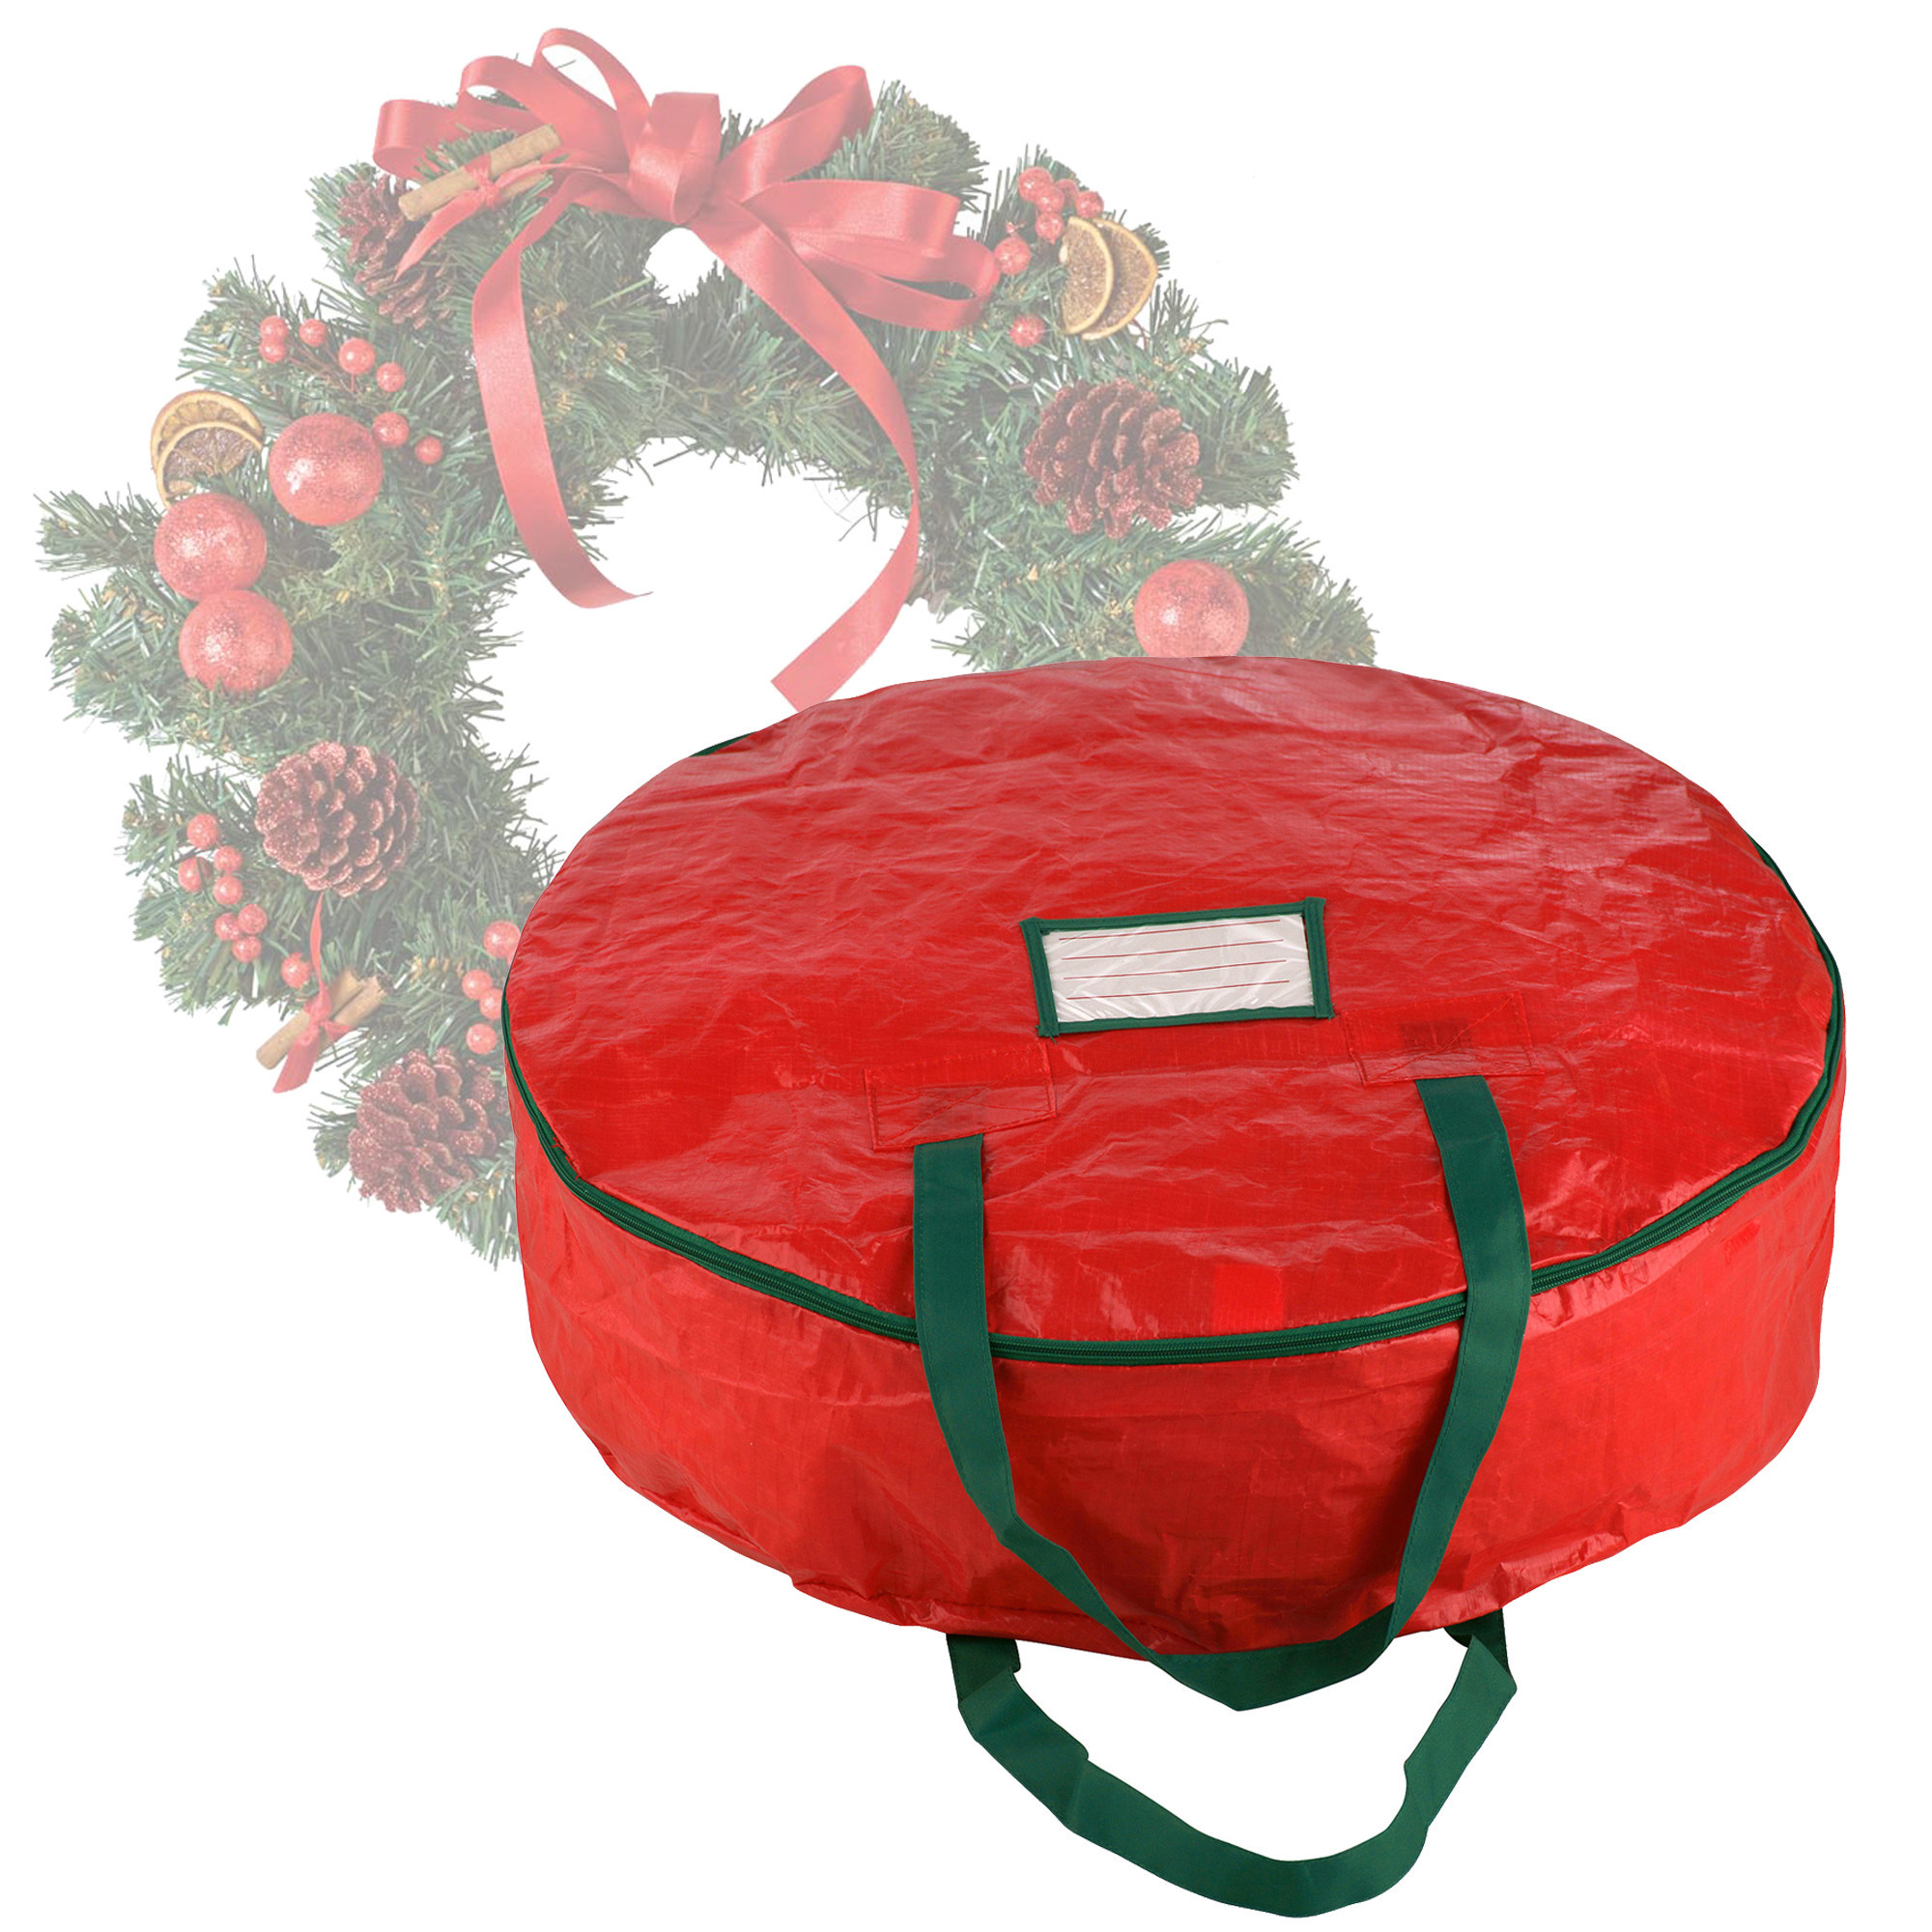 Christmas Wreath Storage
 Elf Stor Premium Holiday Christmas Wreath Storage Bag for